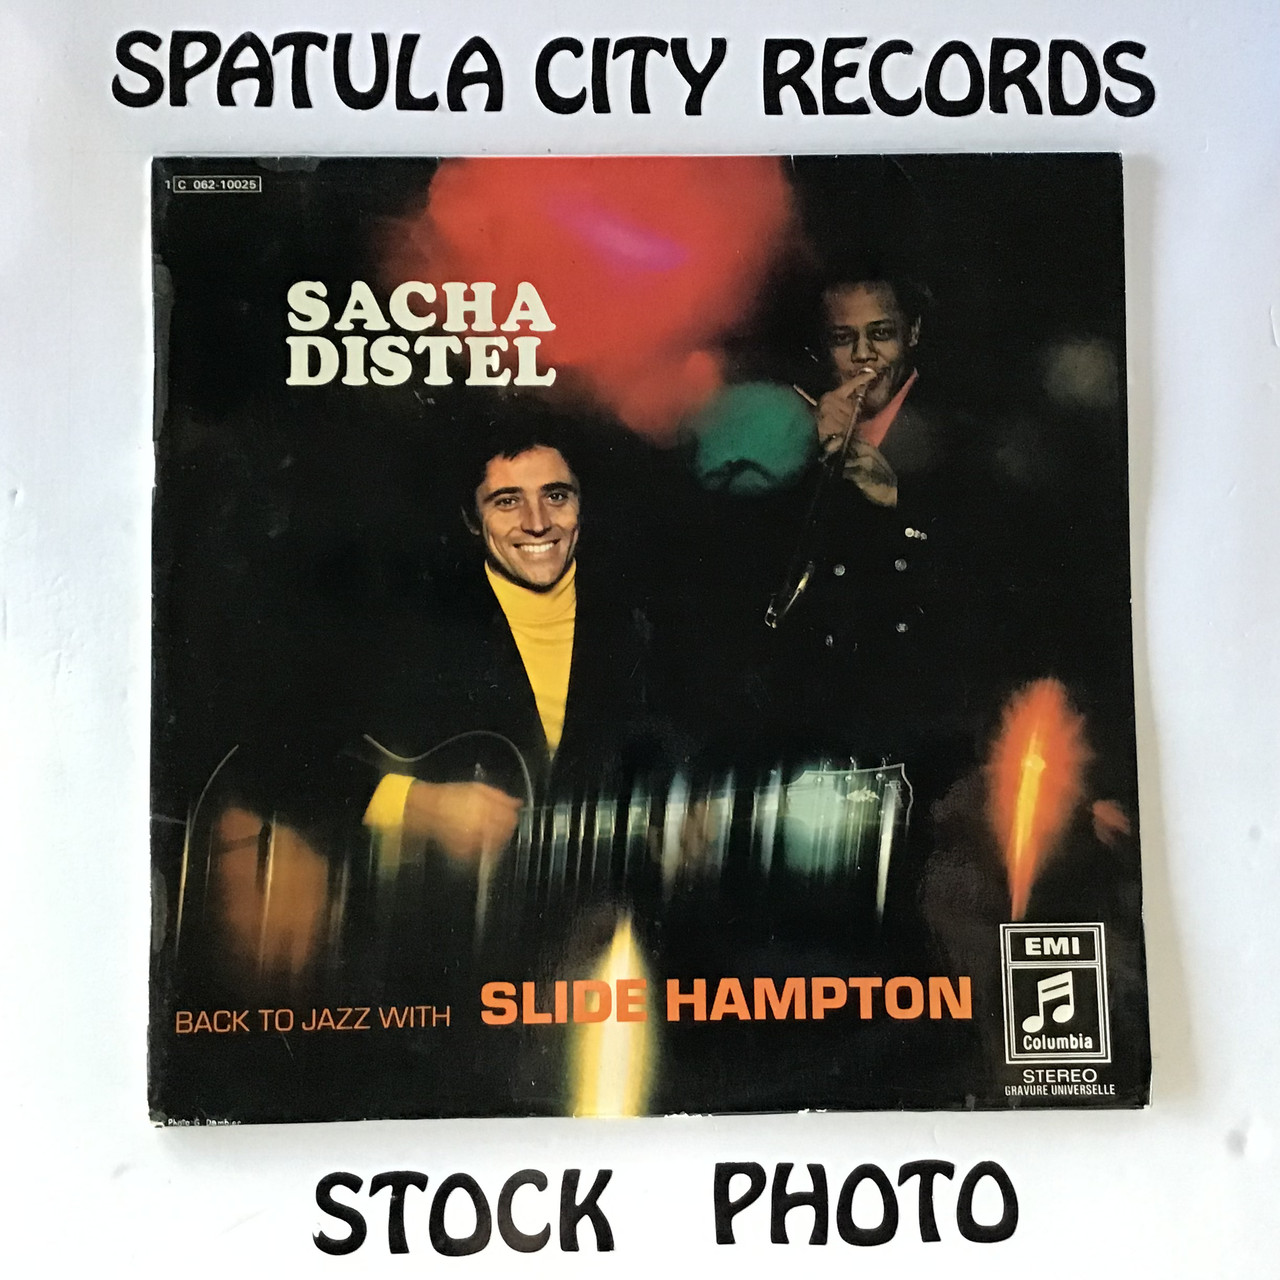 Sacha Distel with Slide Hampton - Back to Jazz - IMPORT - vinyl record LP